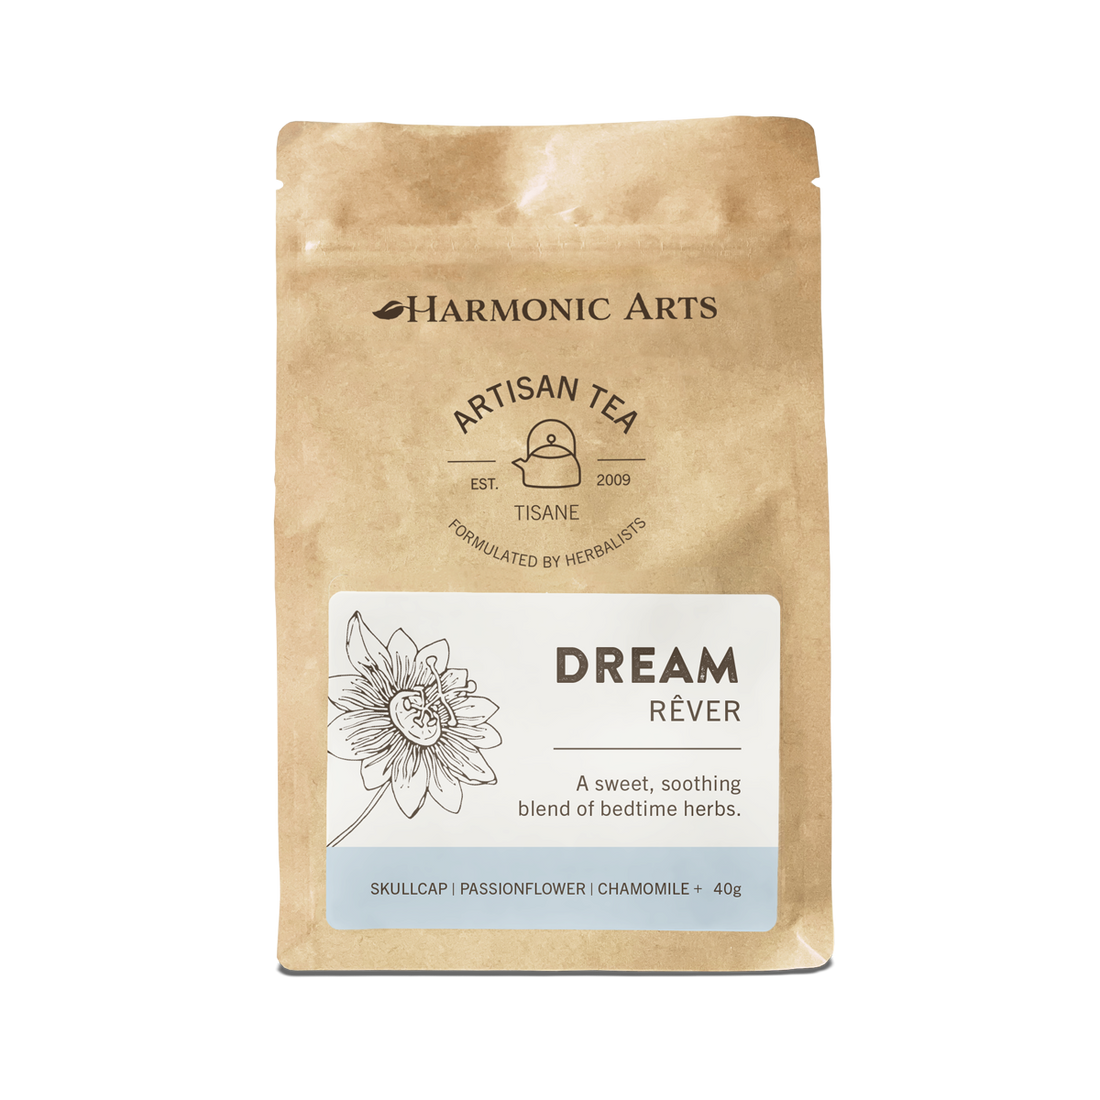 Harmonic Arts Dream Artisan Tea